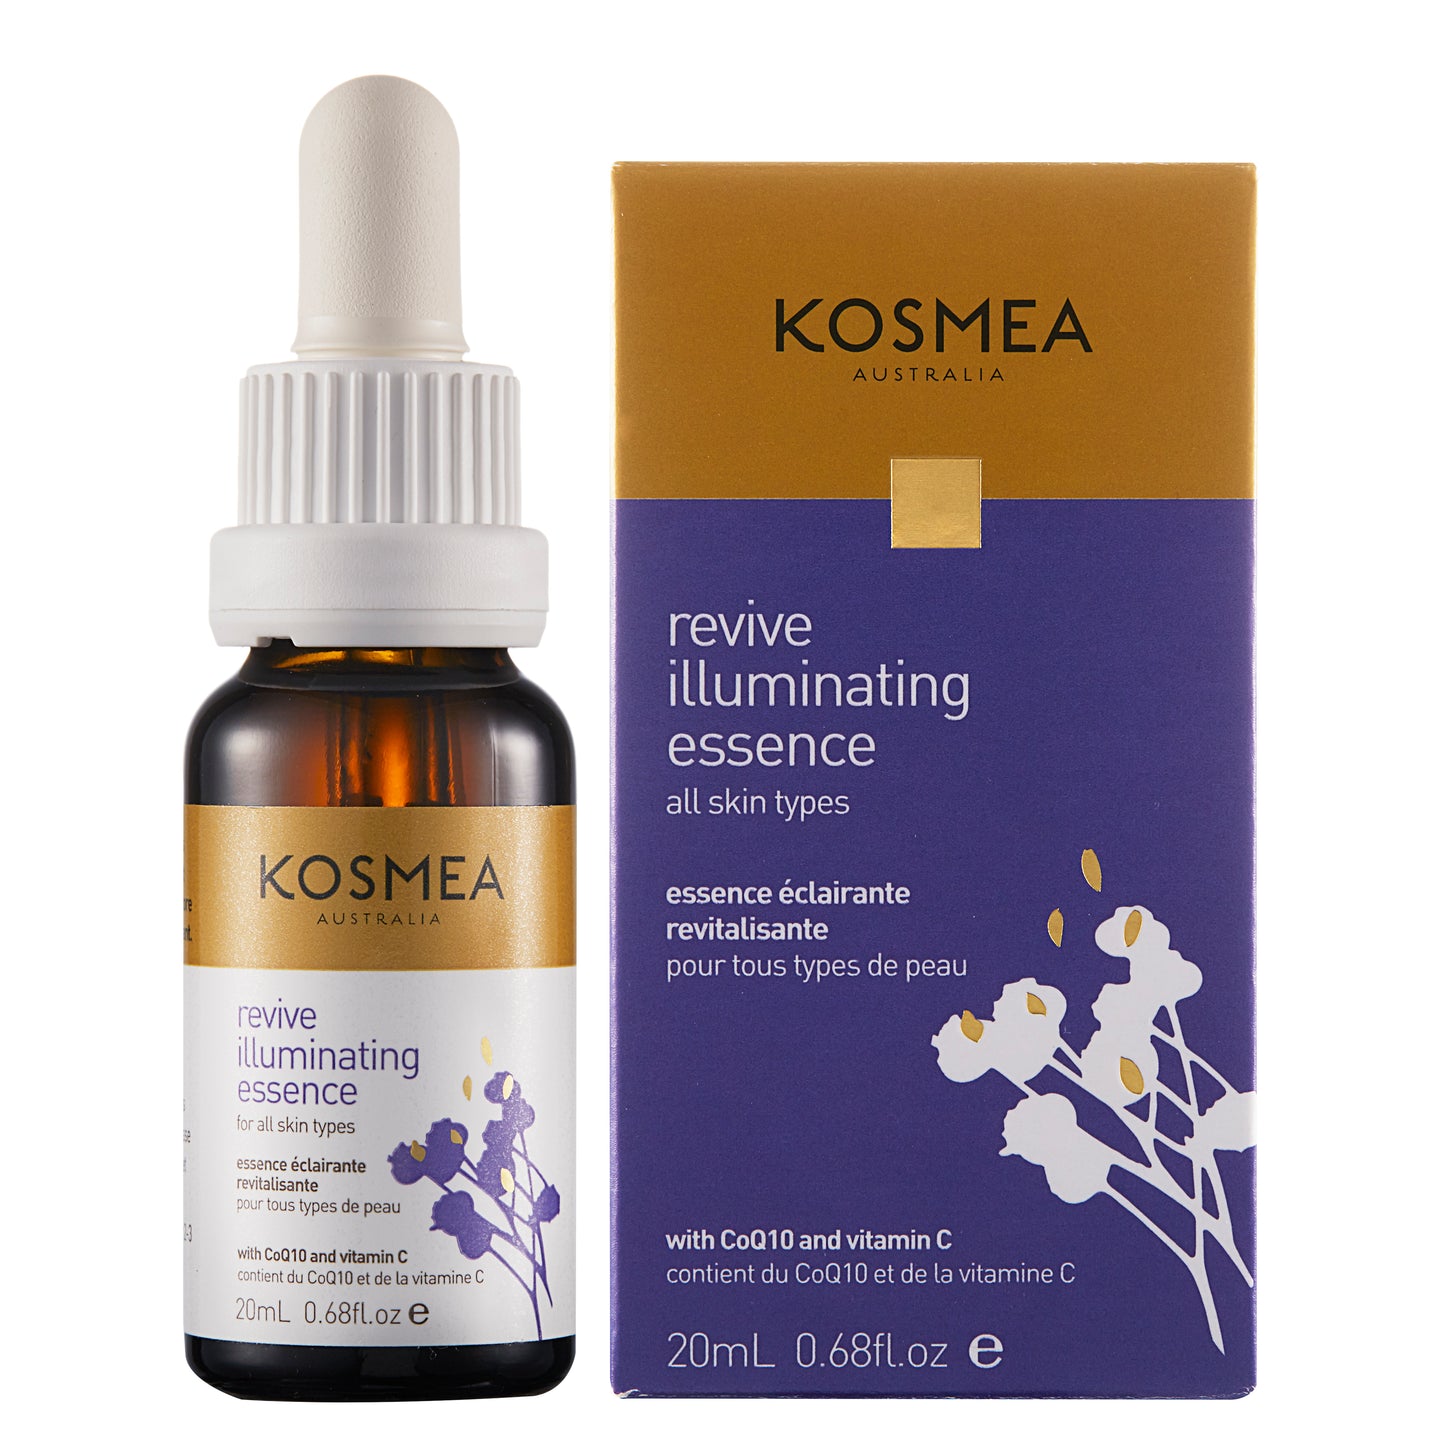 Kosmea Australia Revive Illuminating Essence 20ml now available in USA